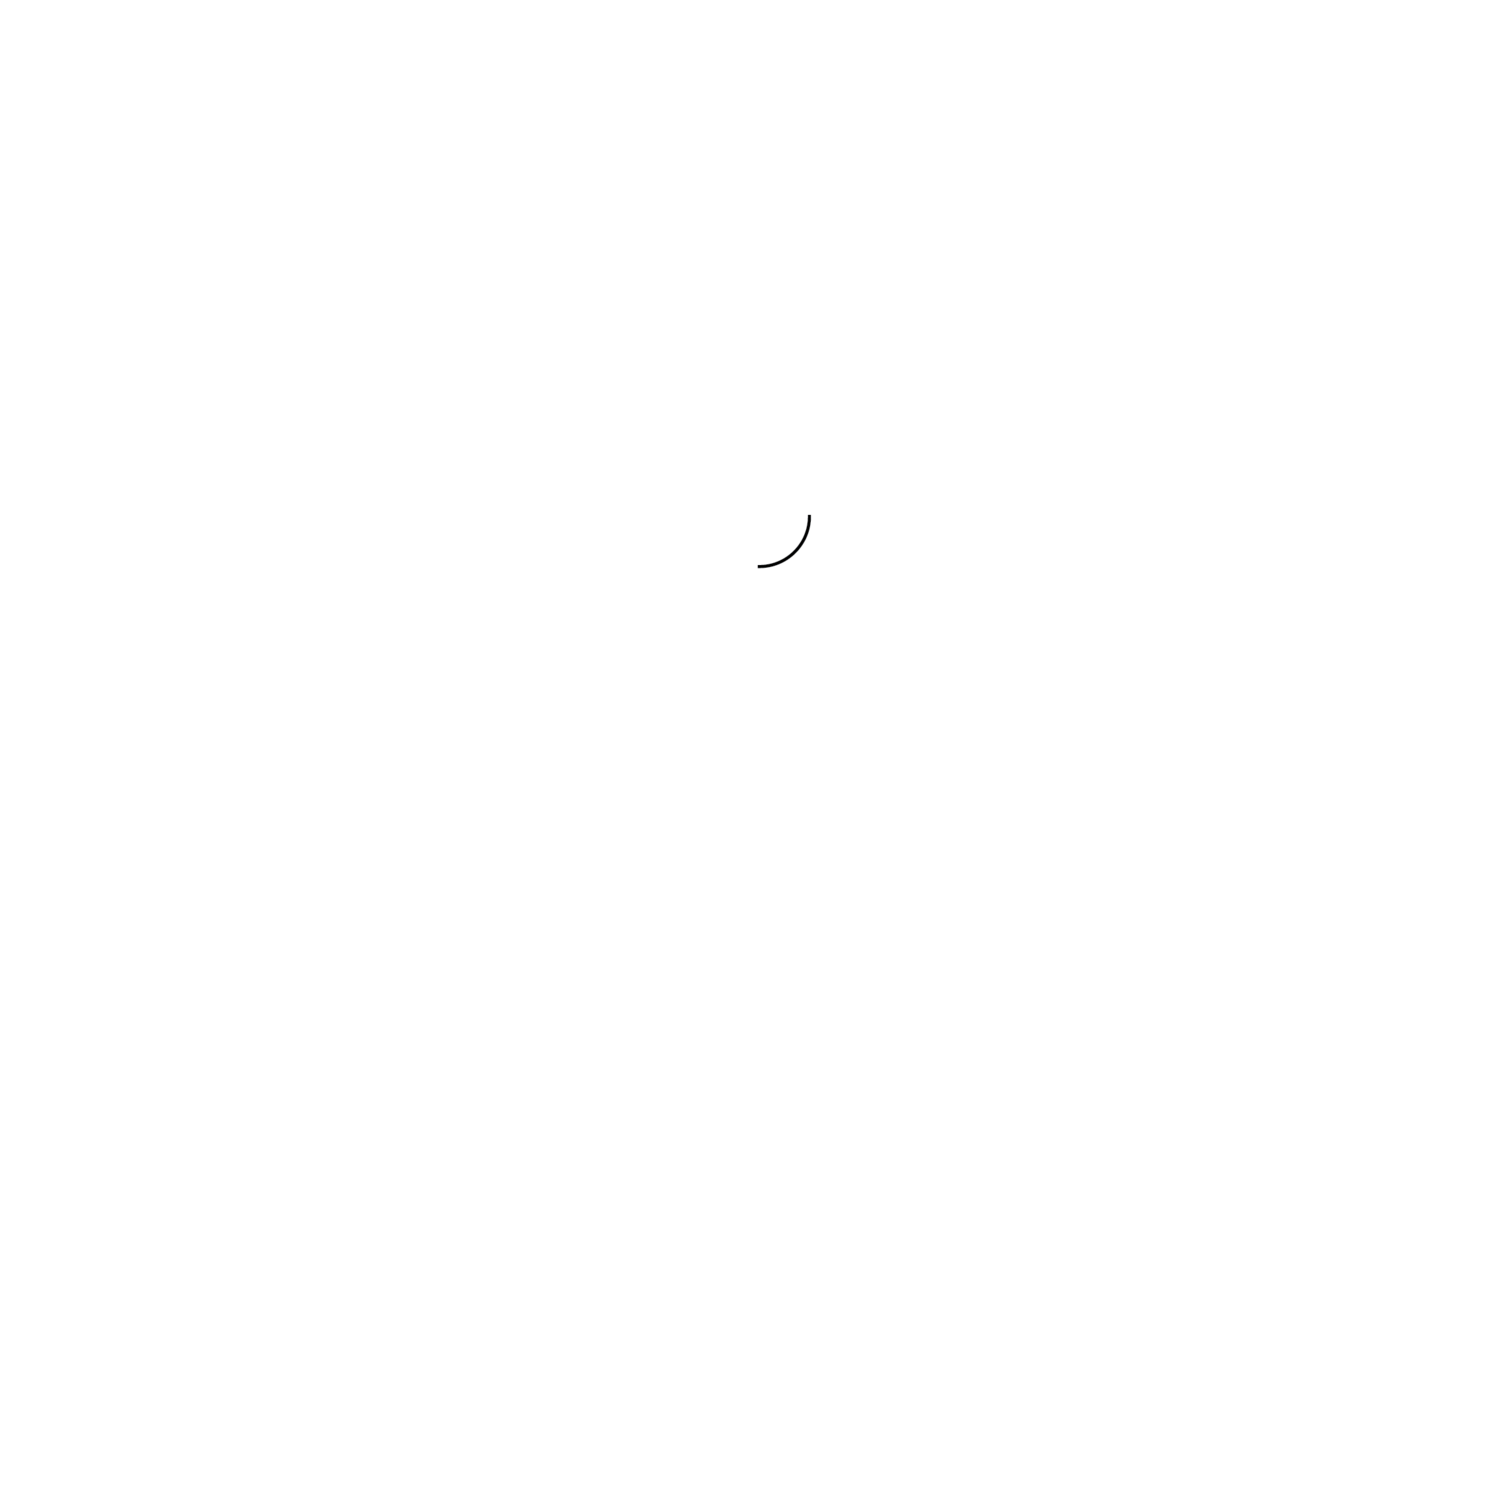 LoveMoore Photography